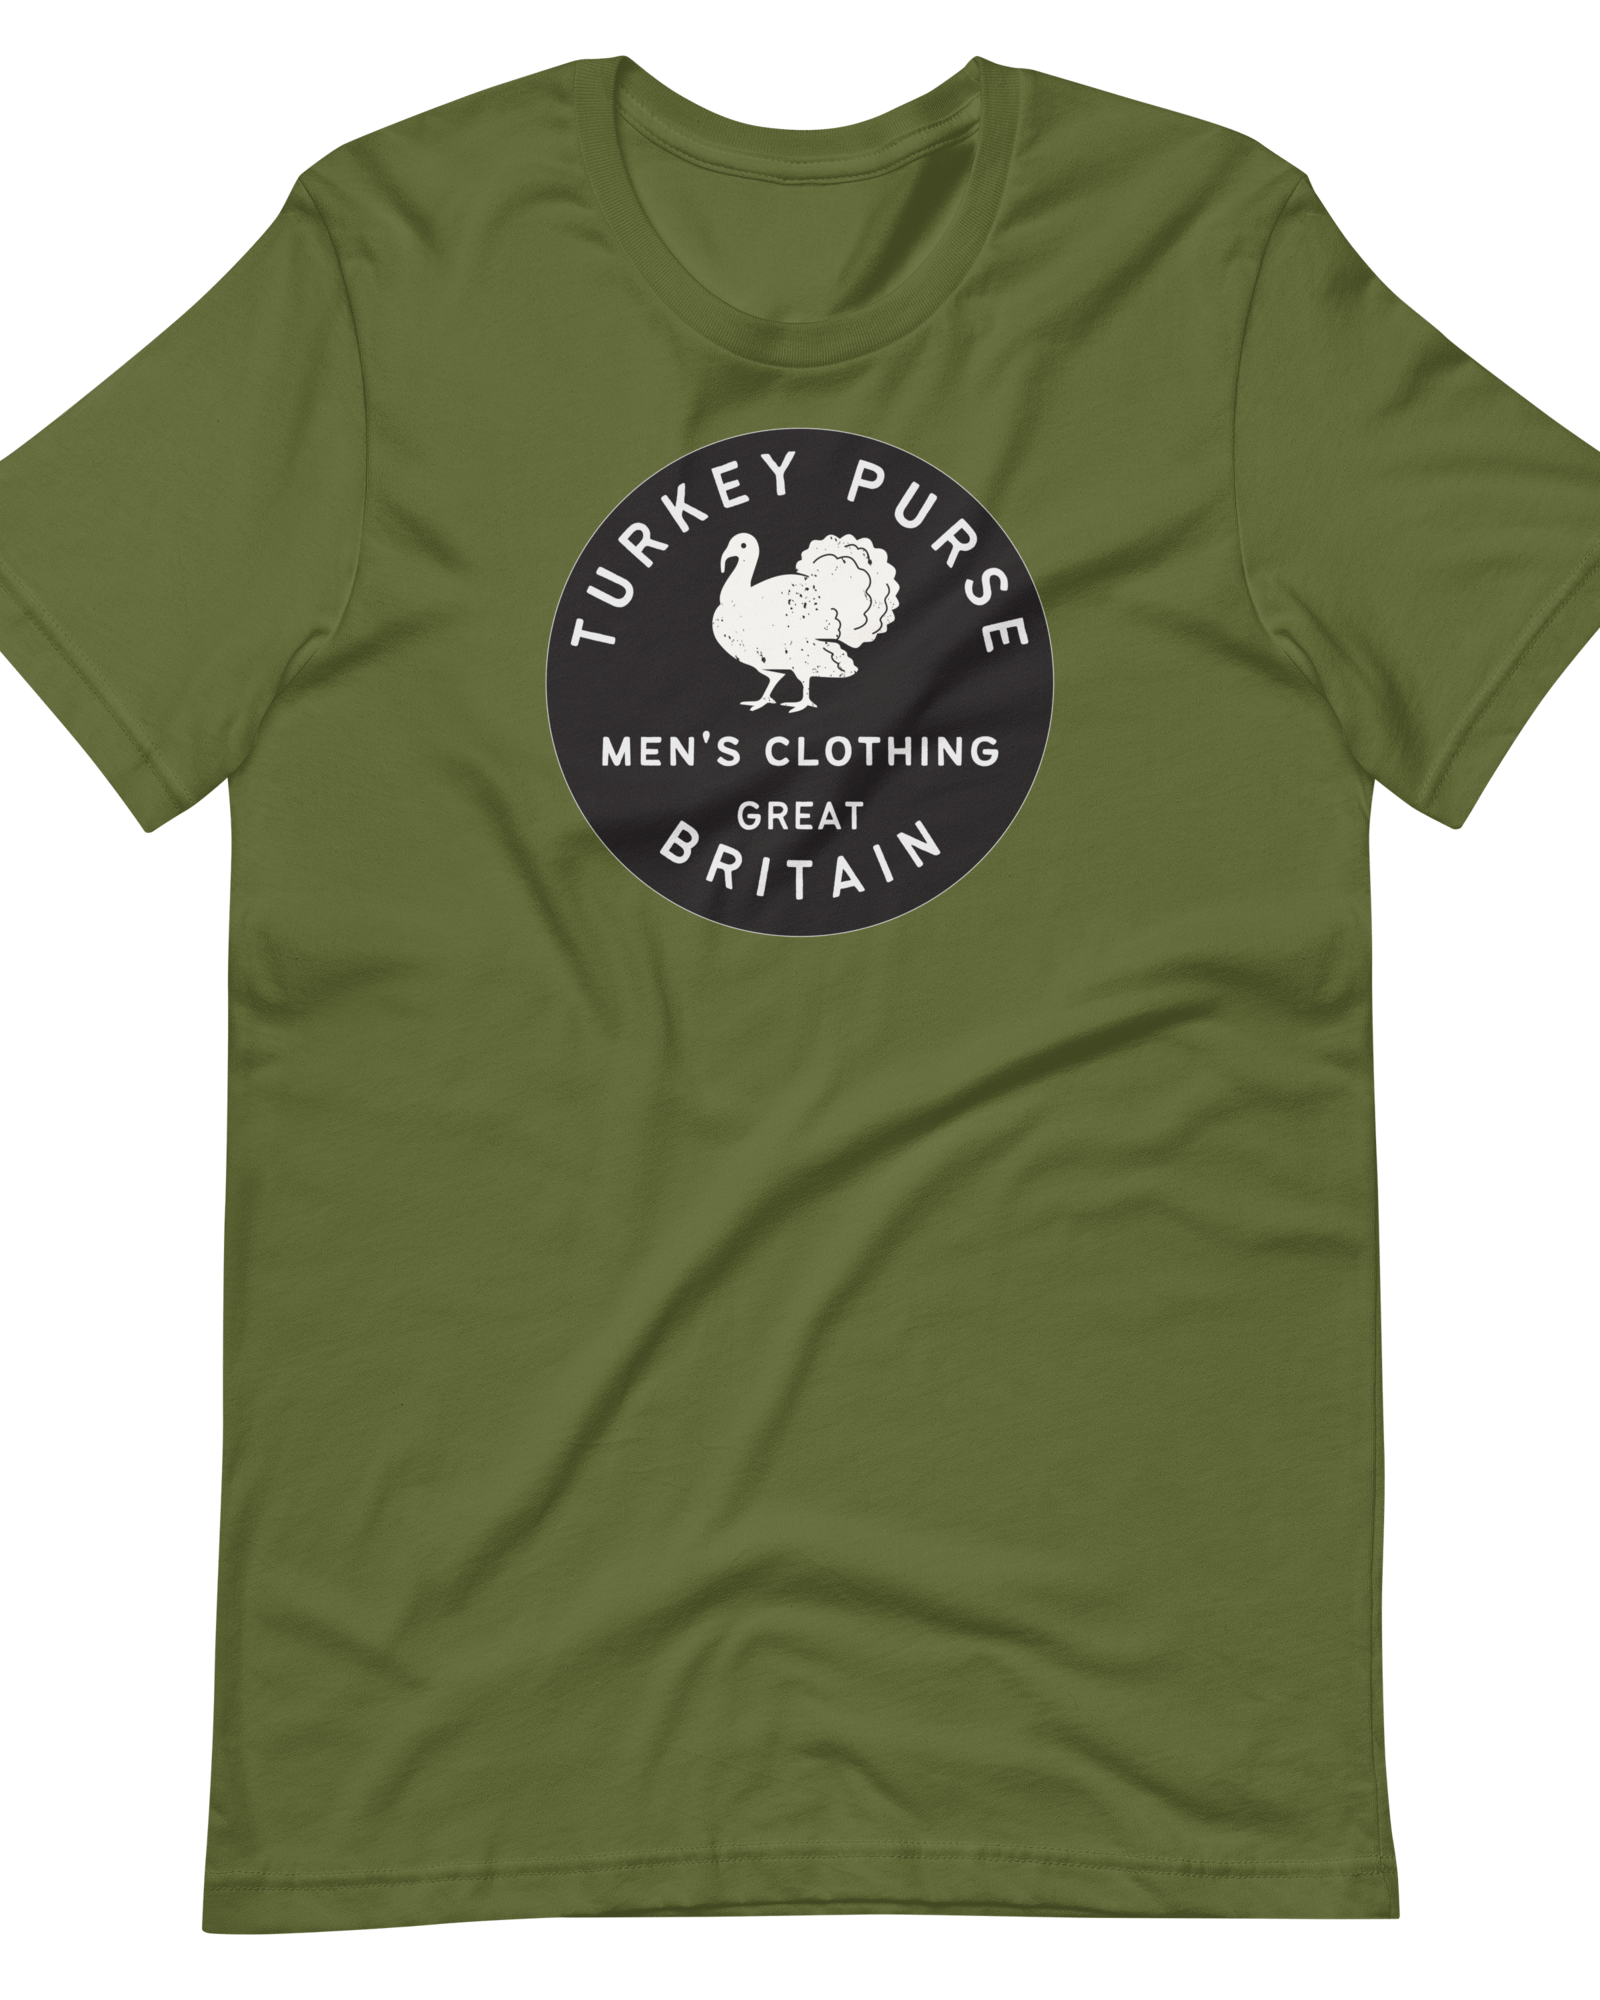 Turkey Purse Men's Clothing T-shirt Olive / S Jolly & Goode